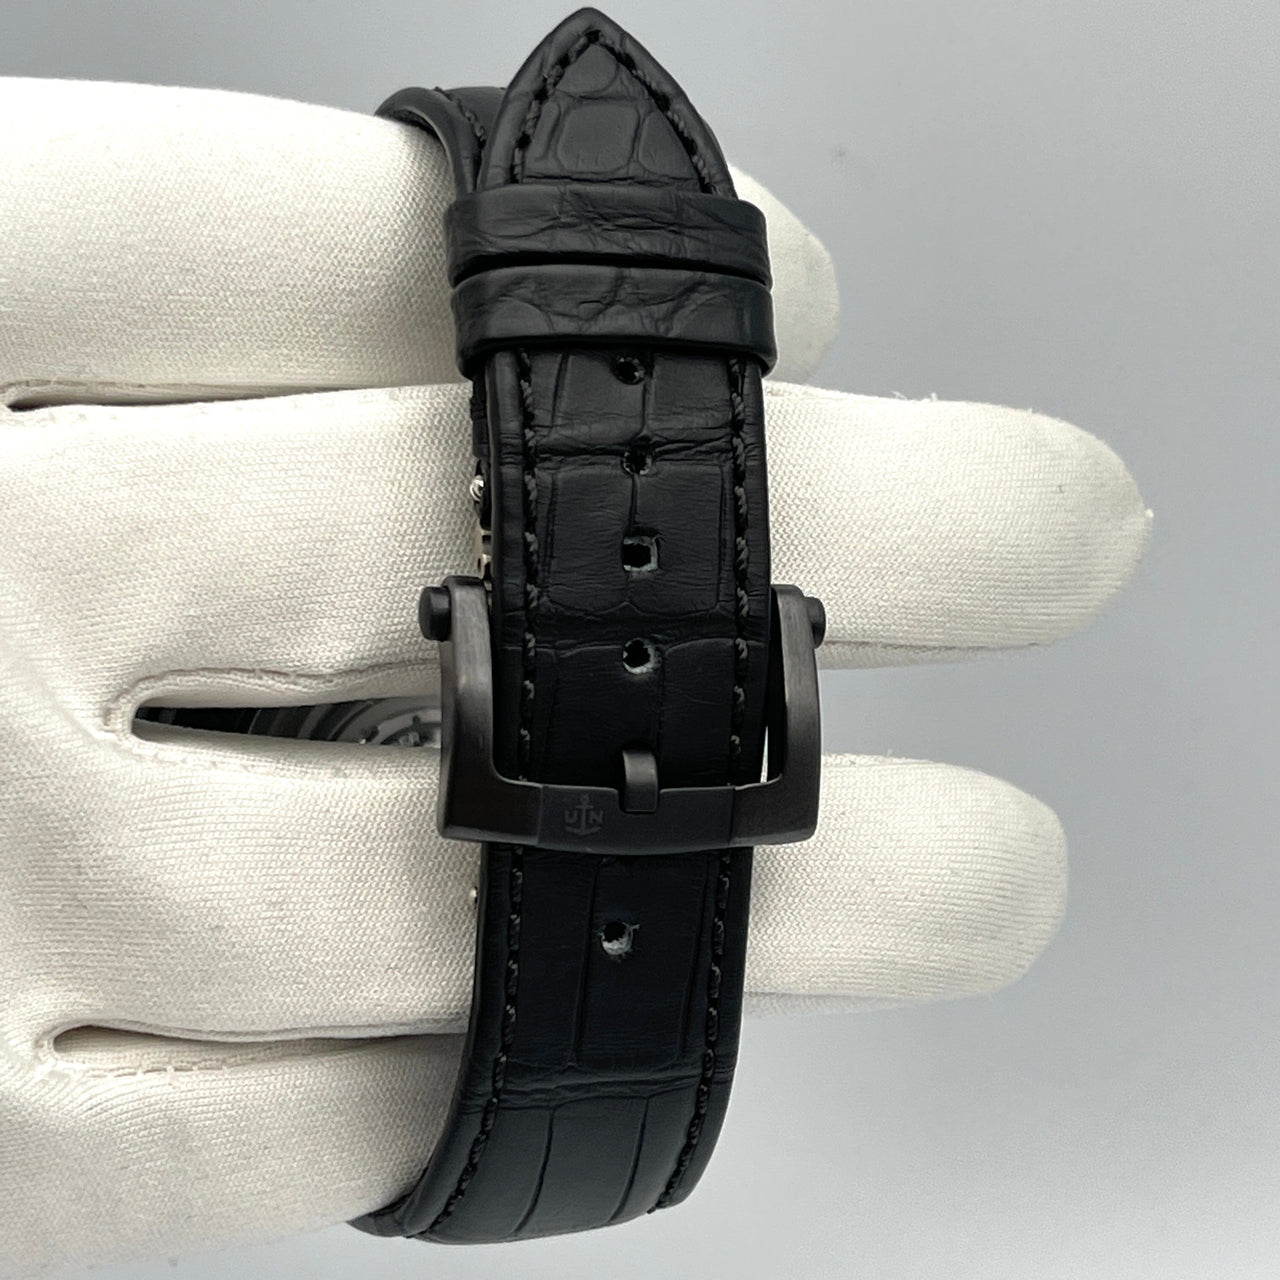 Luxury Watch Ulysse Nardin 2503-250 Black Freak Vision Titanium Wrist Aficionado